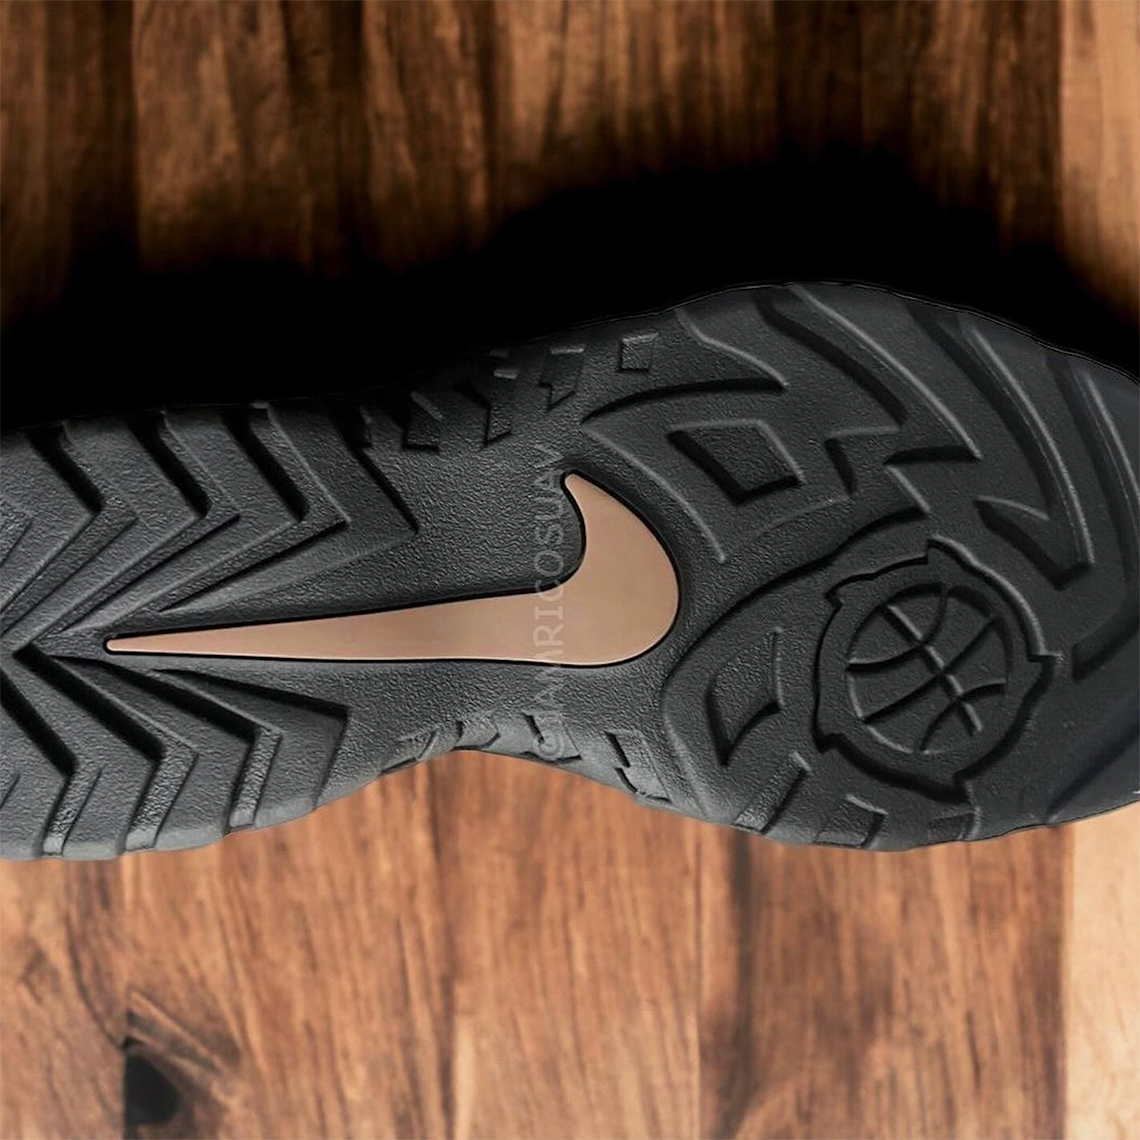 Supreme's Nike SB Air Darwin Low Collab Surfaces